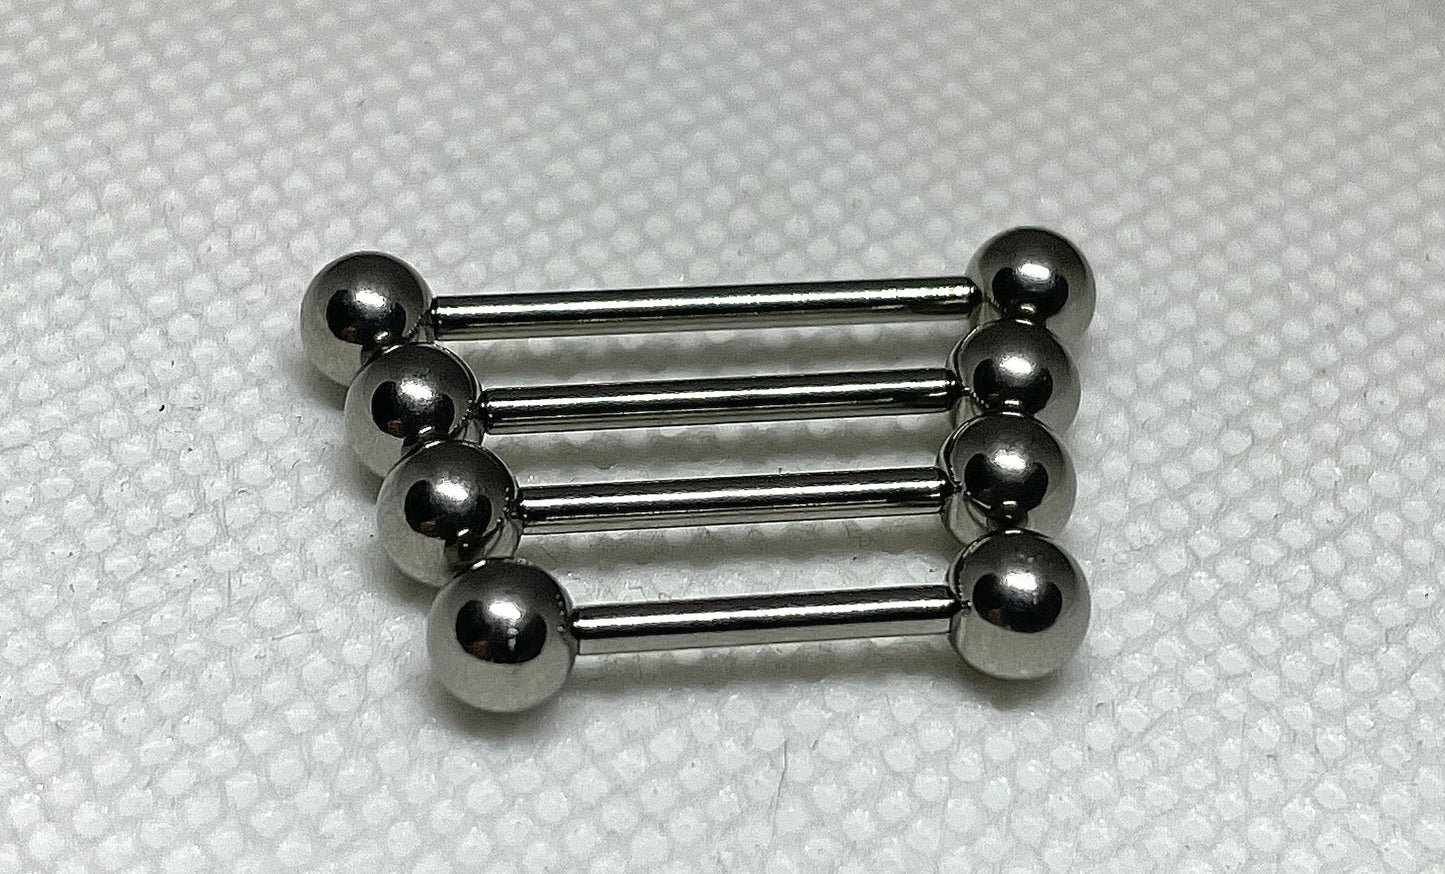 14 gauge 1/2" ASTM F136 titanium internally threaded barbell, 5mm balls-5/8" or 3/4"